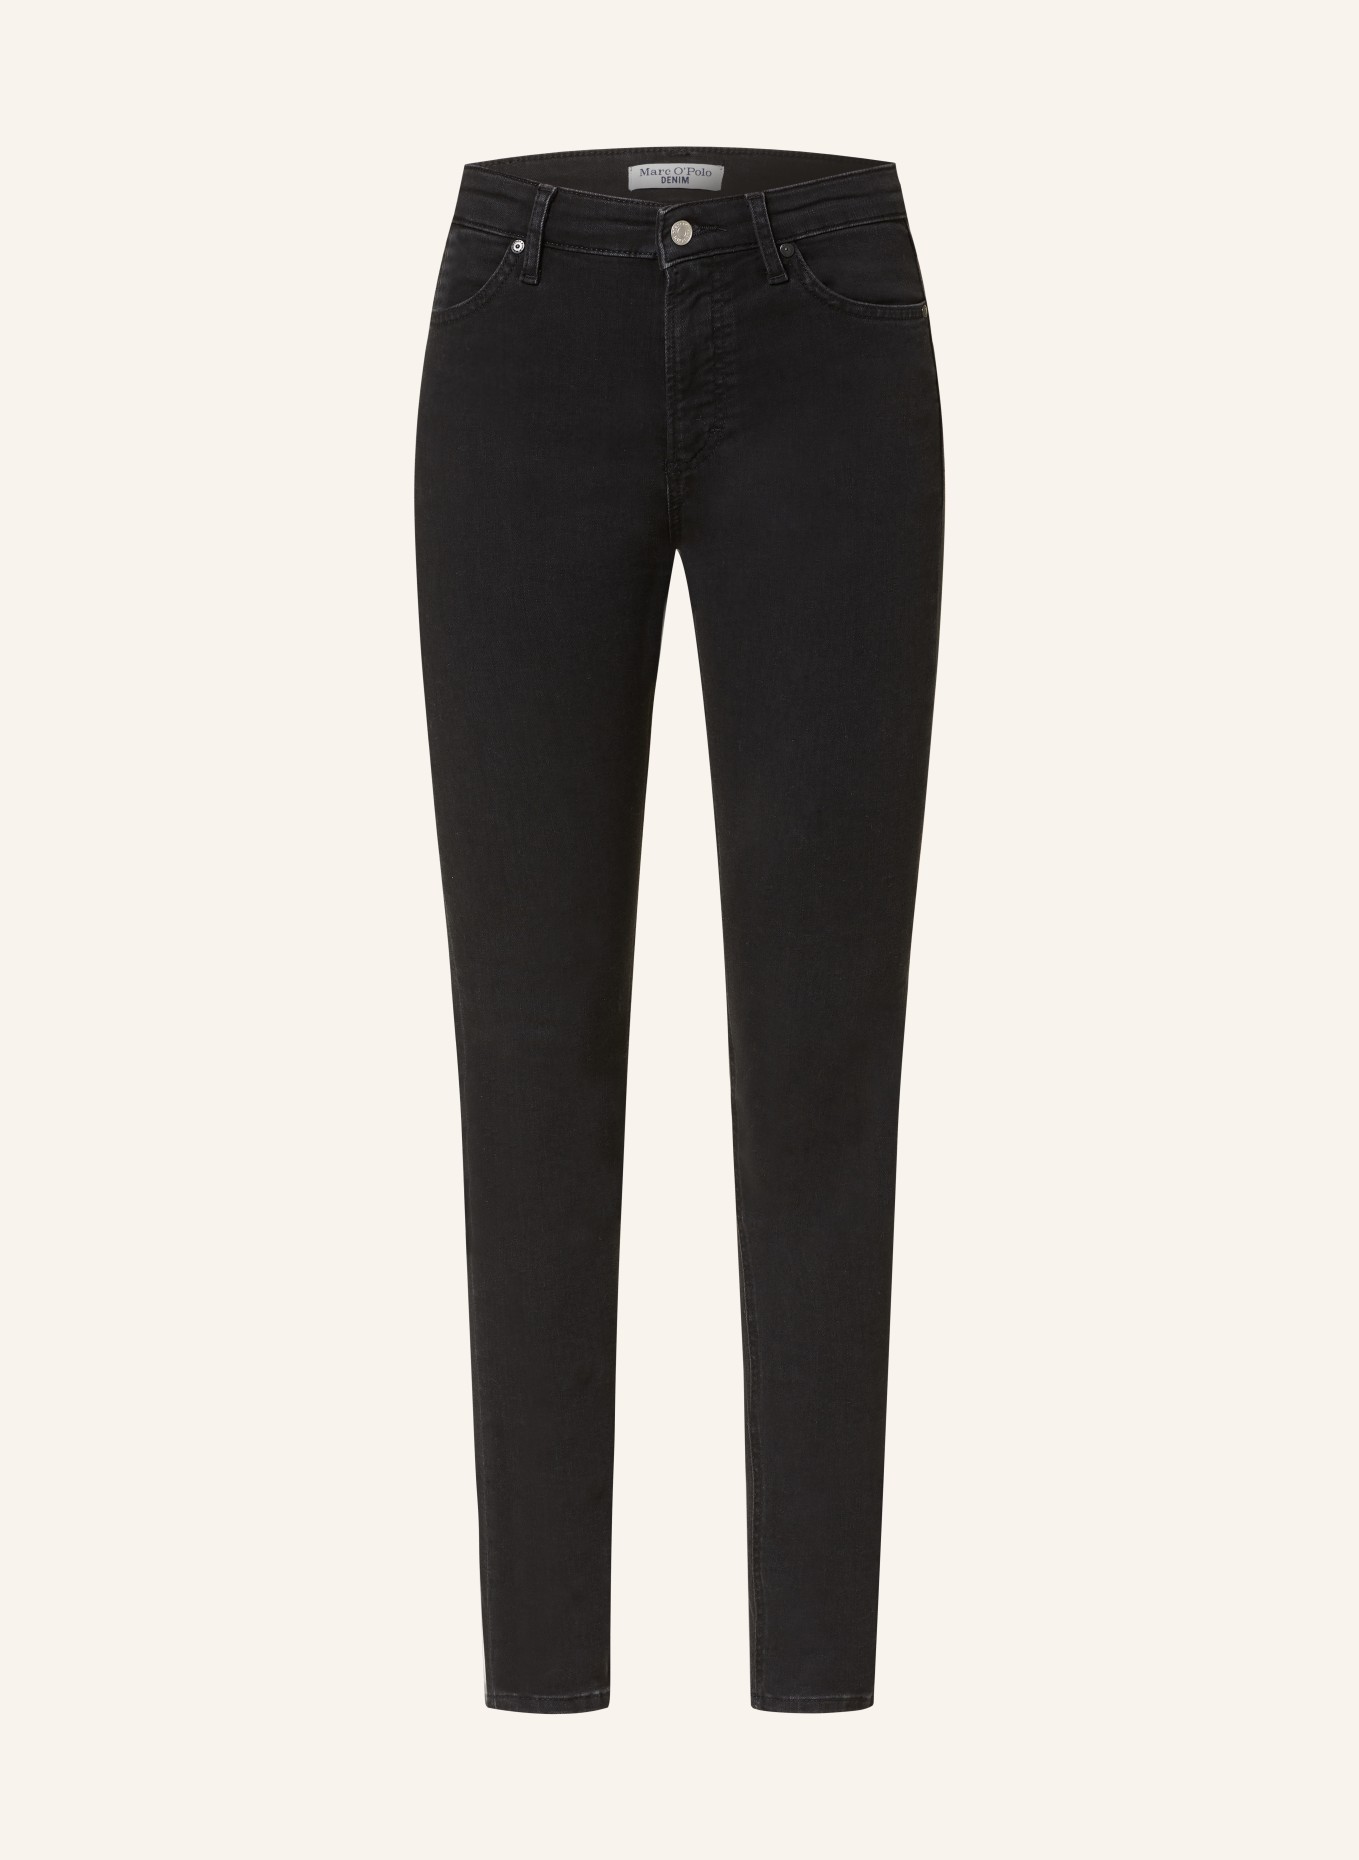 Marc O'Polo DENIM Skinny Jeans, Farbe: Q54 multi/clean black (Bild 1)